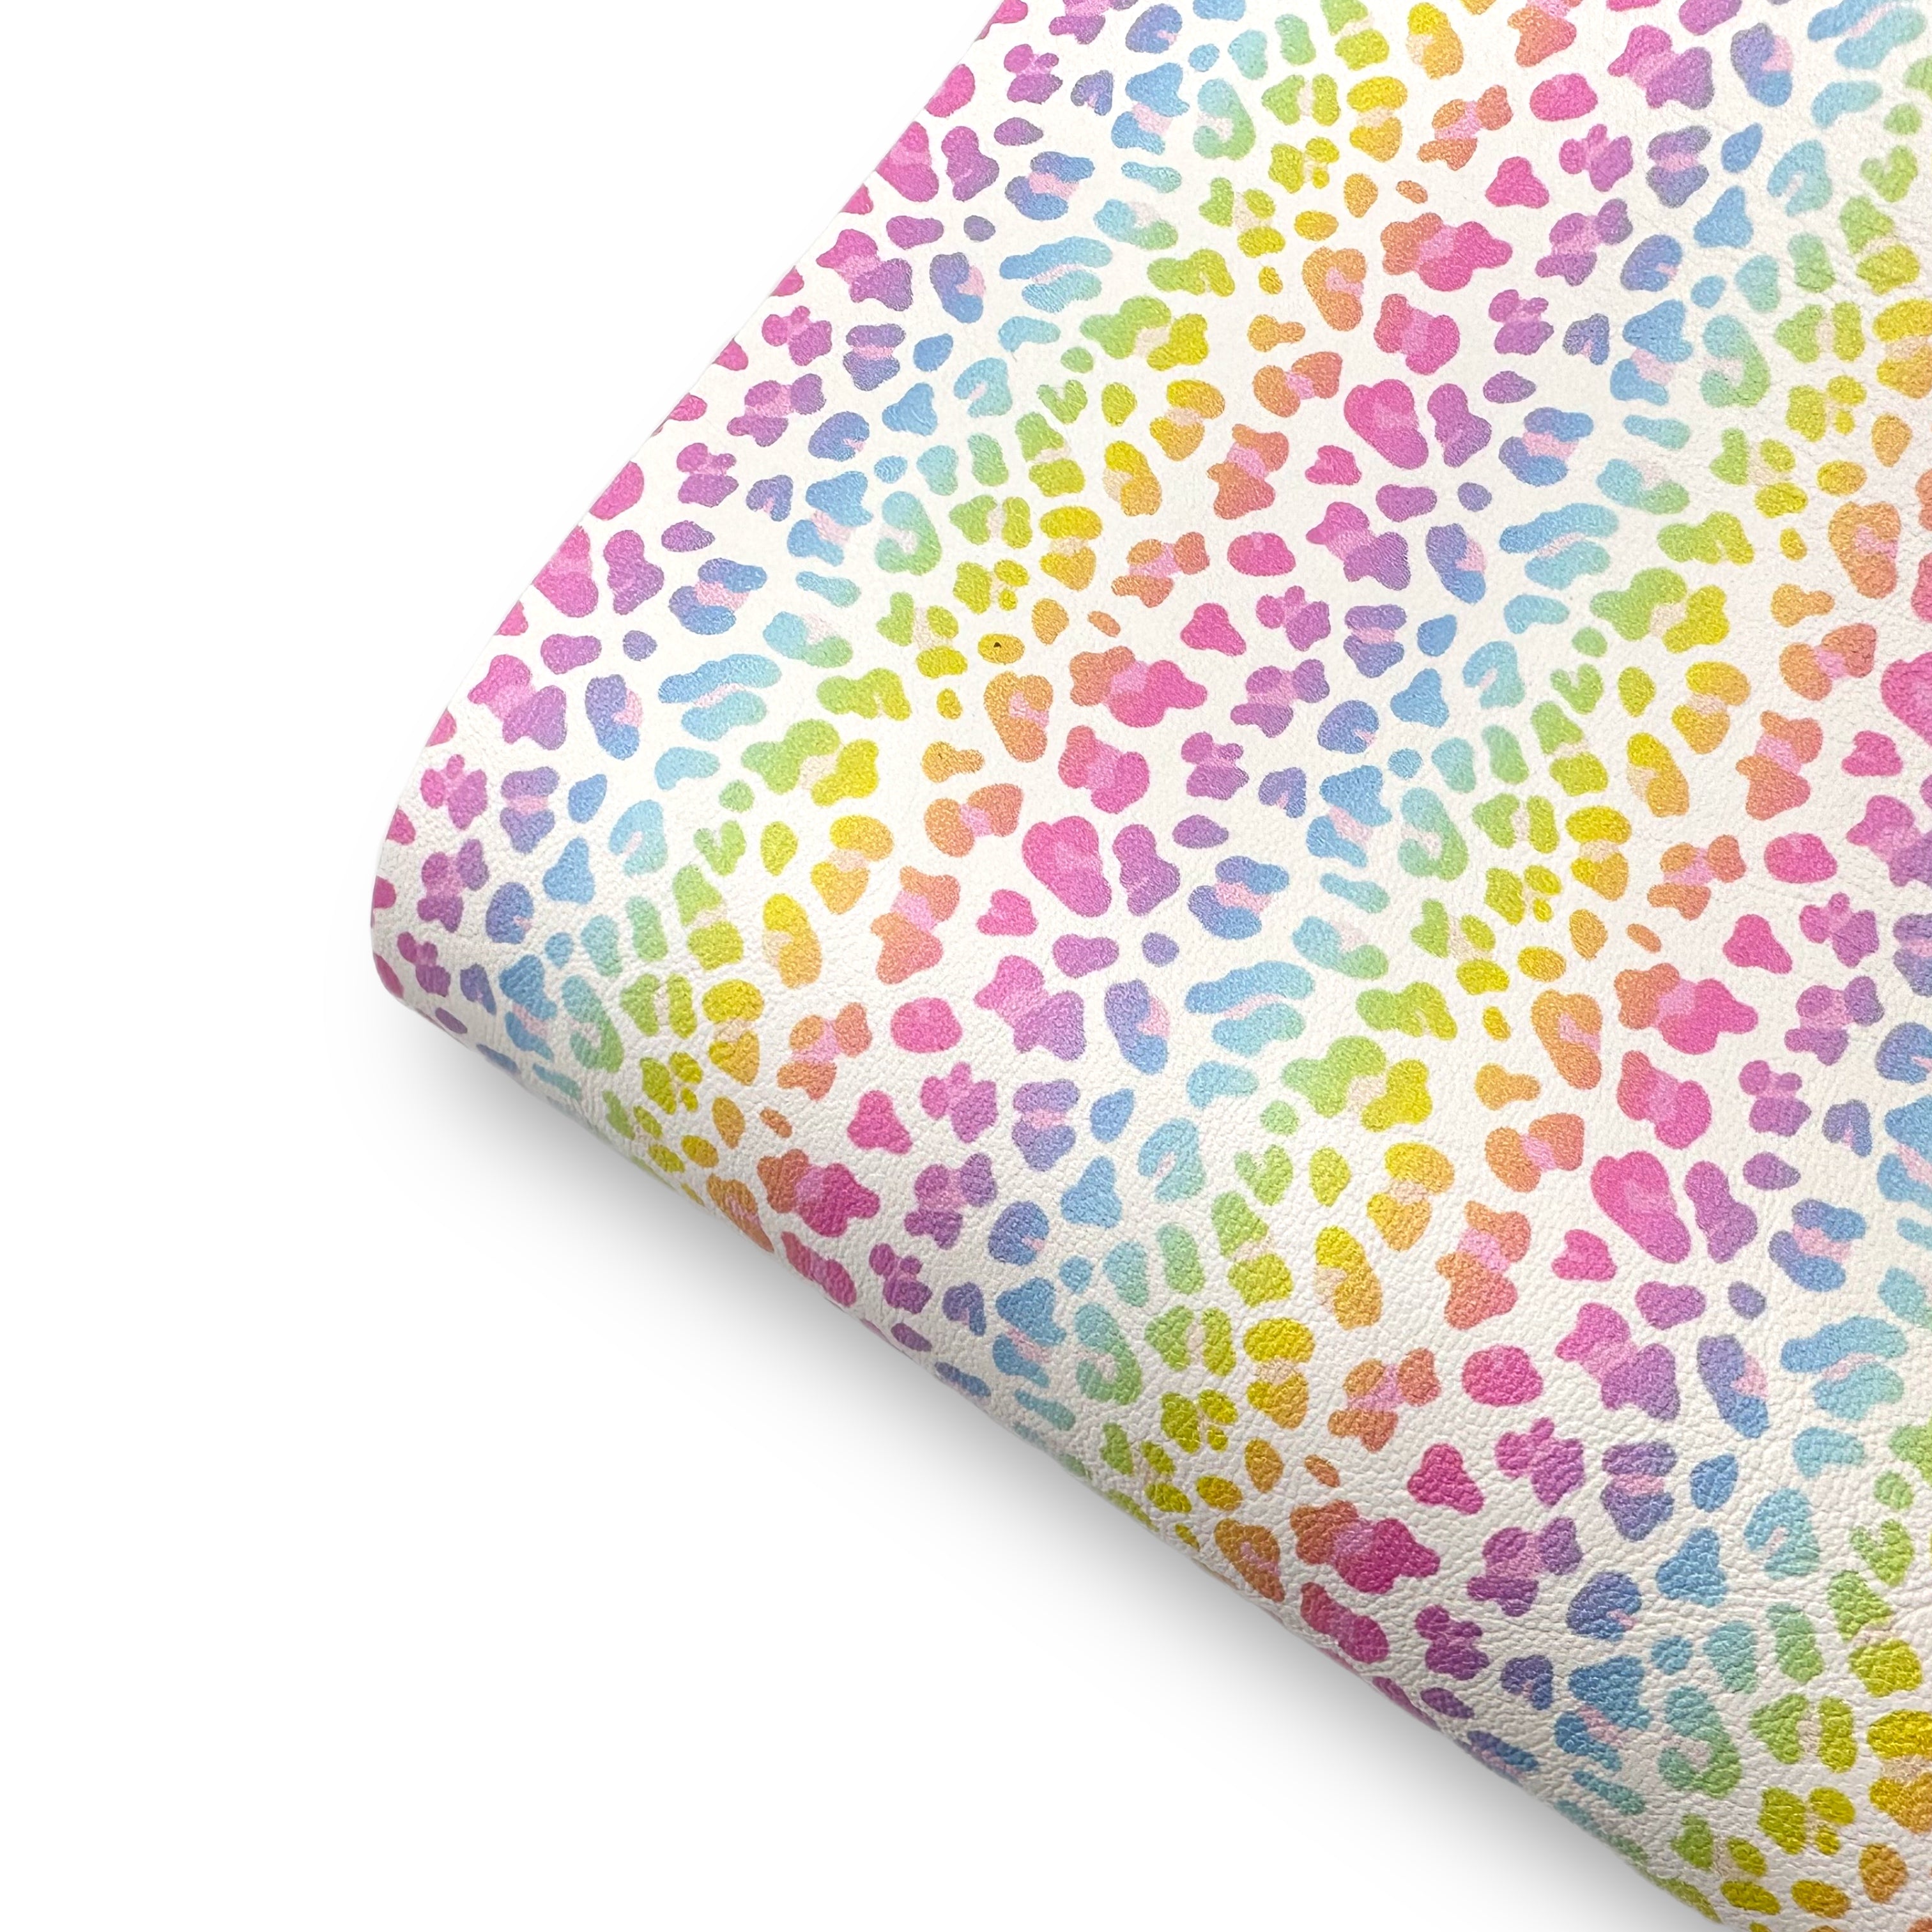 Pastel Ombre Leopard Print Premium Faux Leather Fabric Sheets